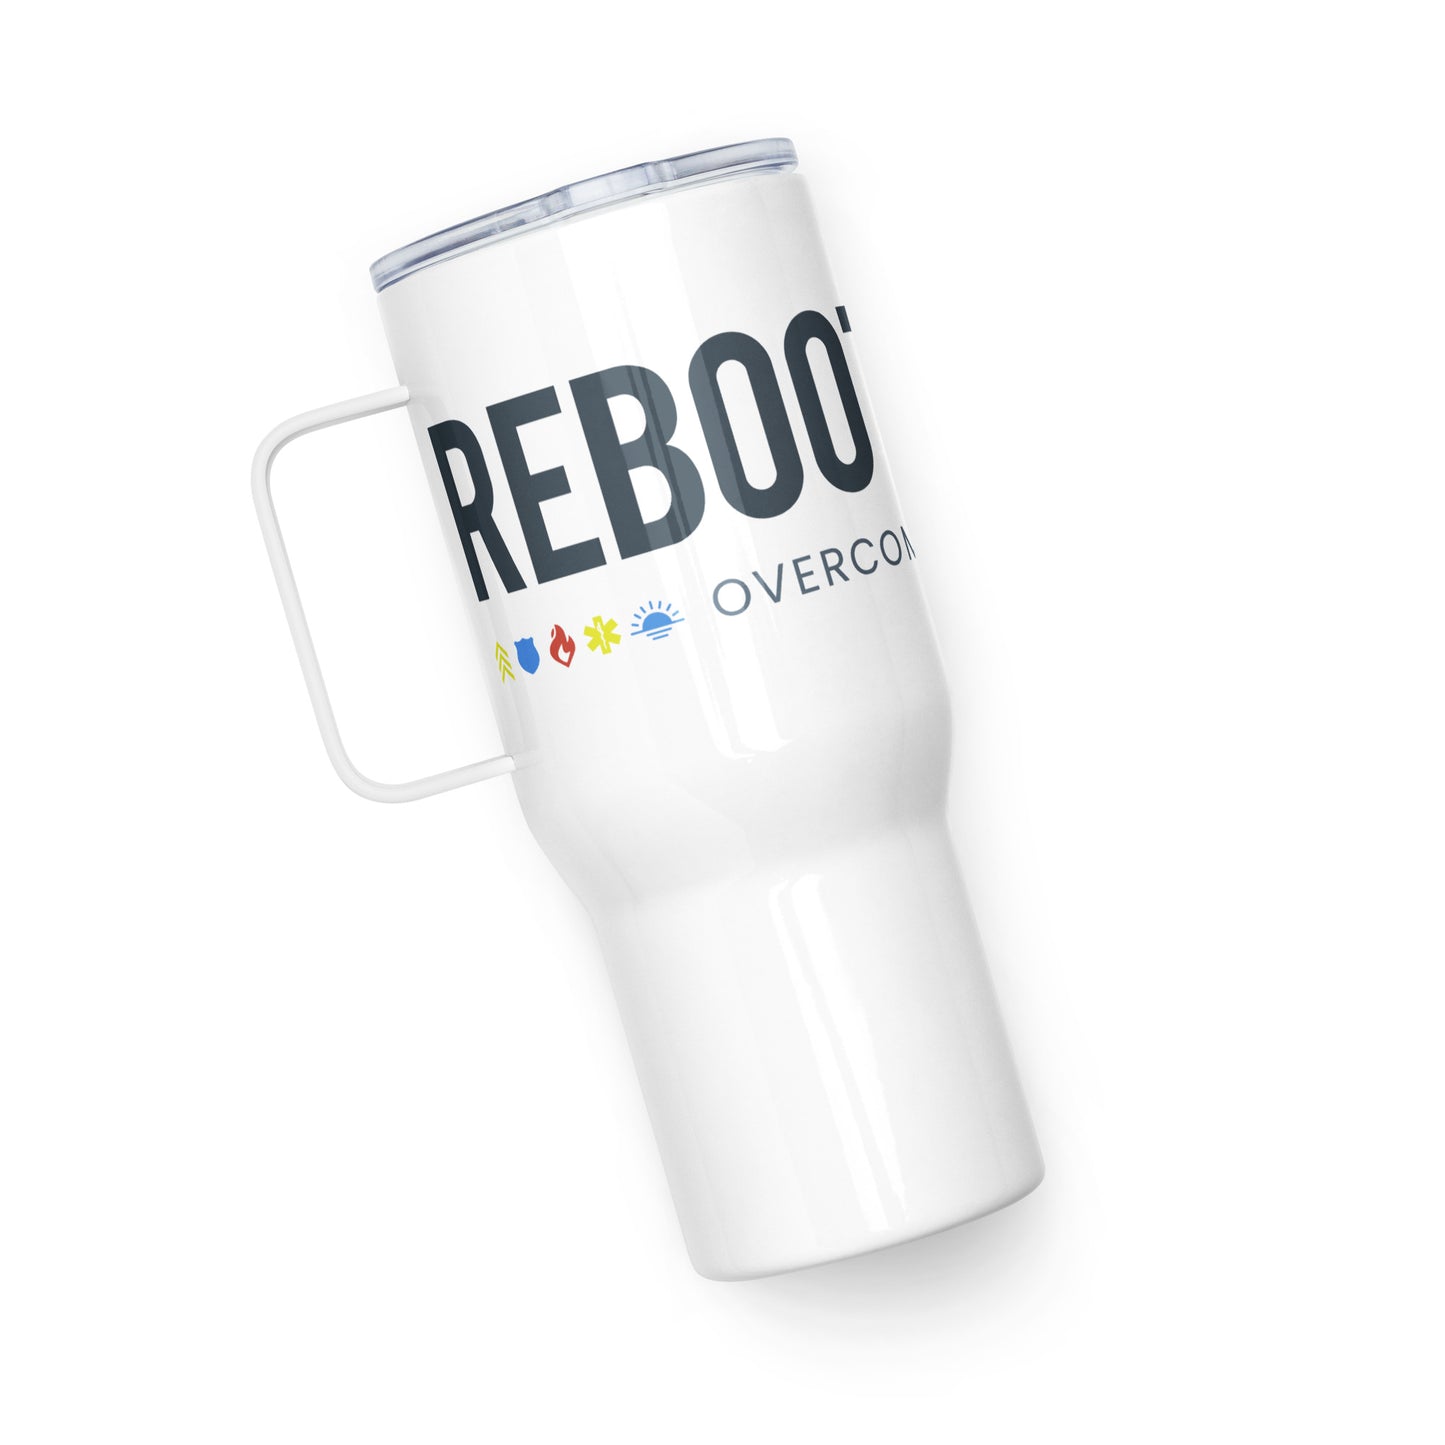 RR Travel mug with a handle